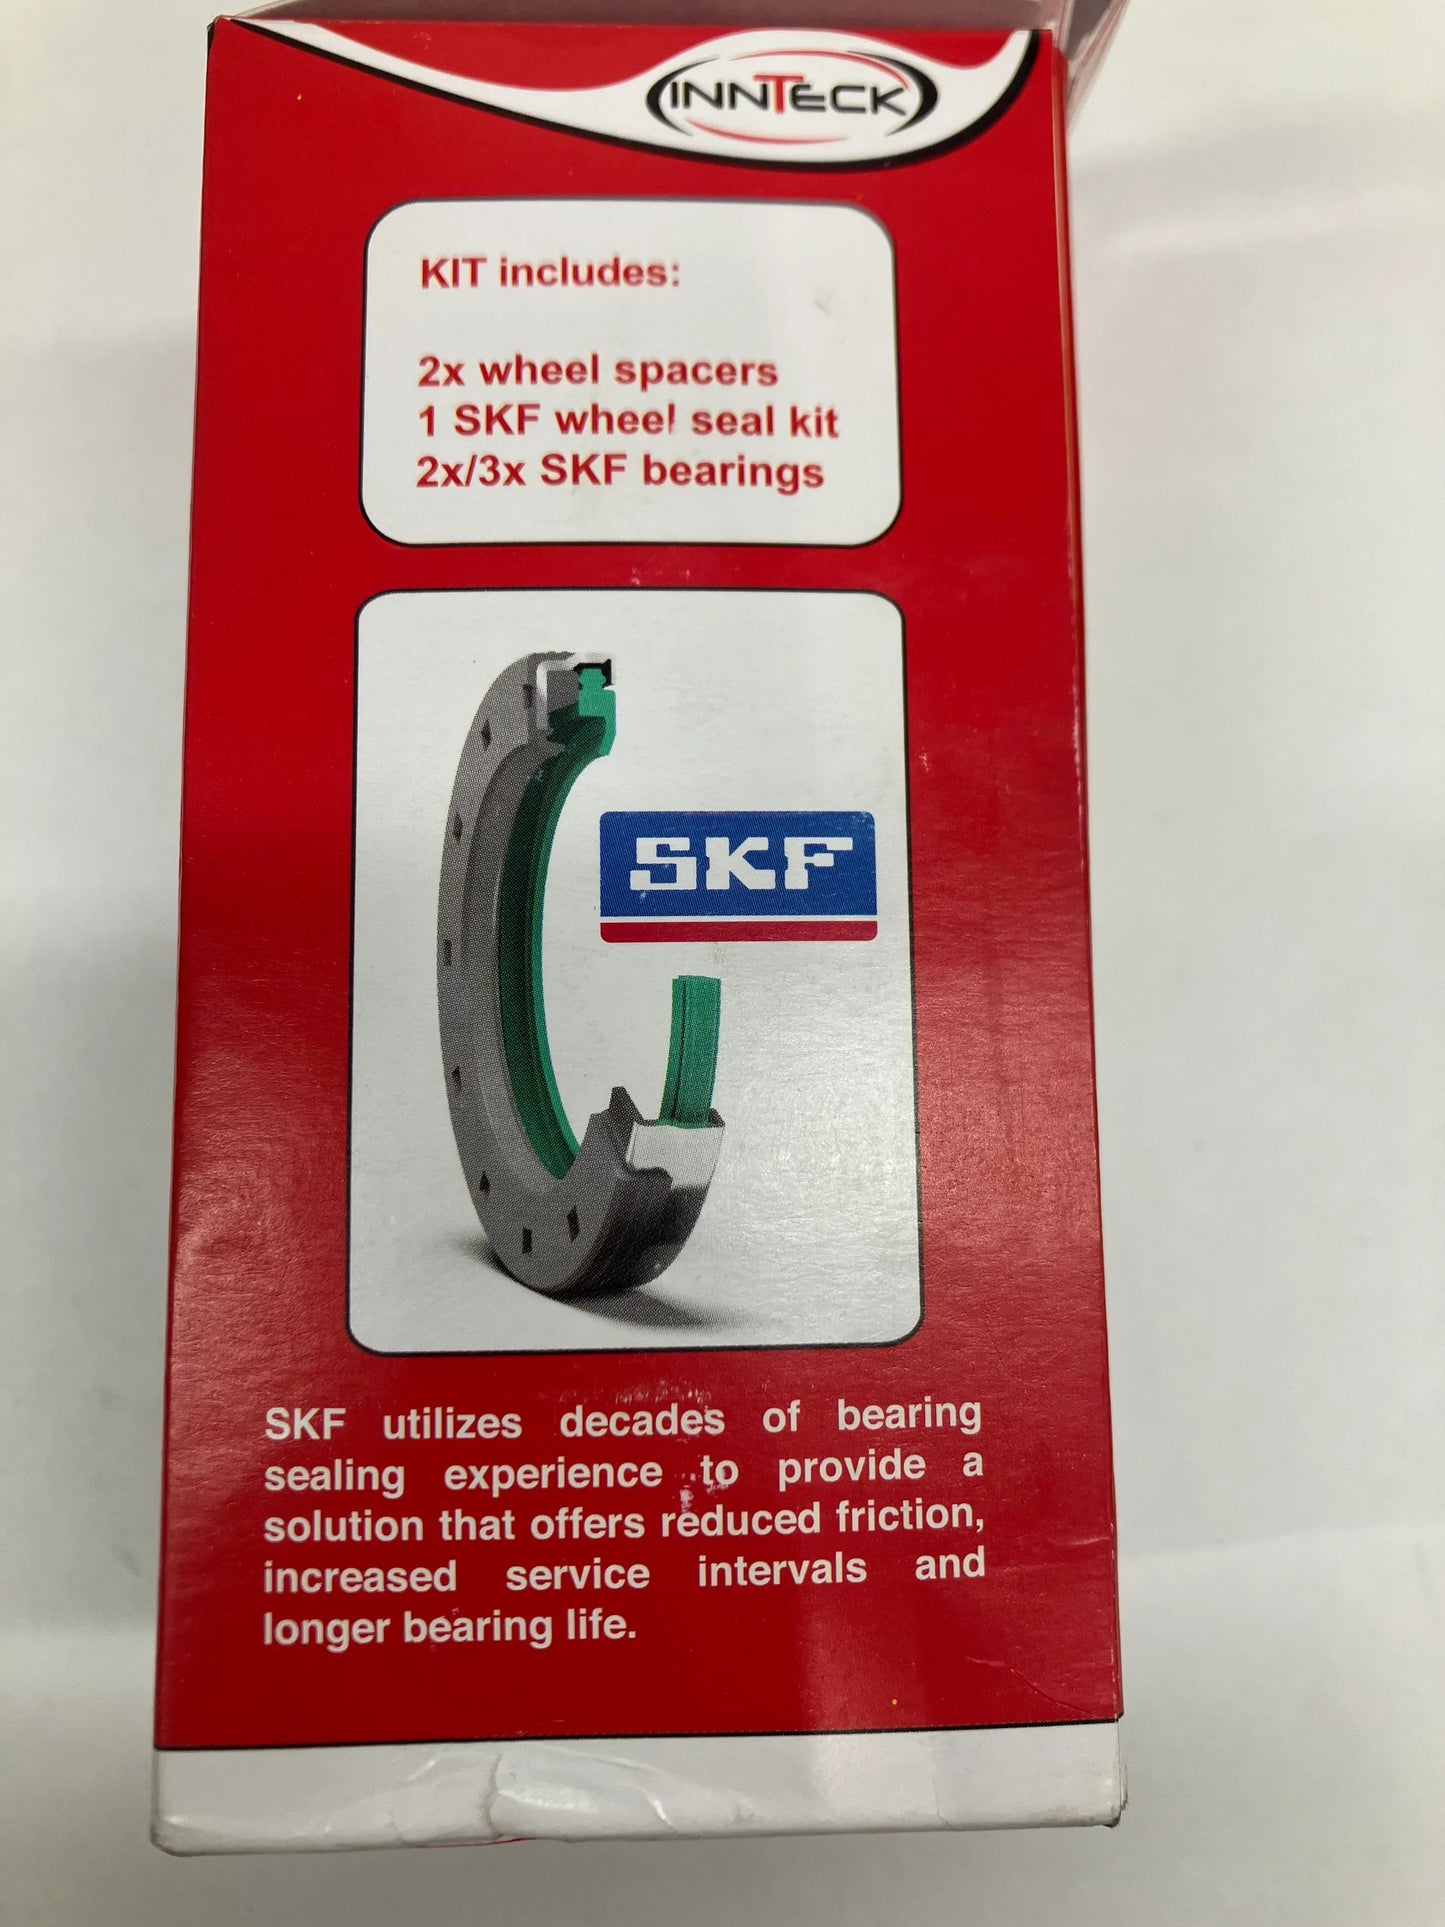 SKF Rear Wheel Bearing, Seals and Spacer kit for Suzuki WSB-KIT-R008-Su